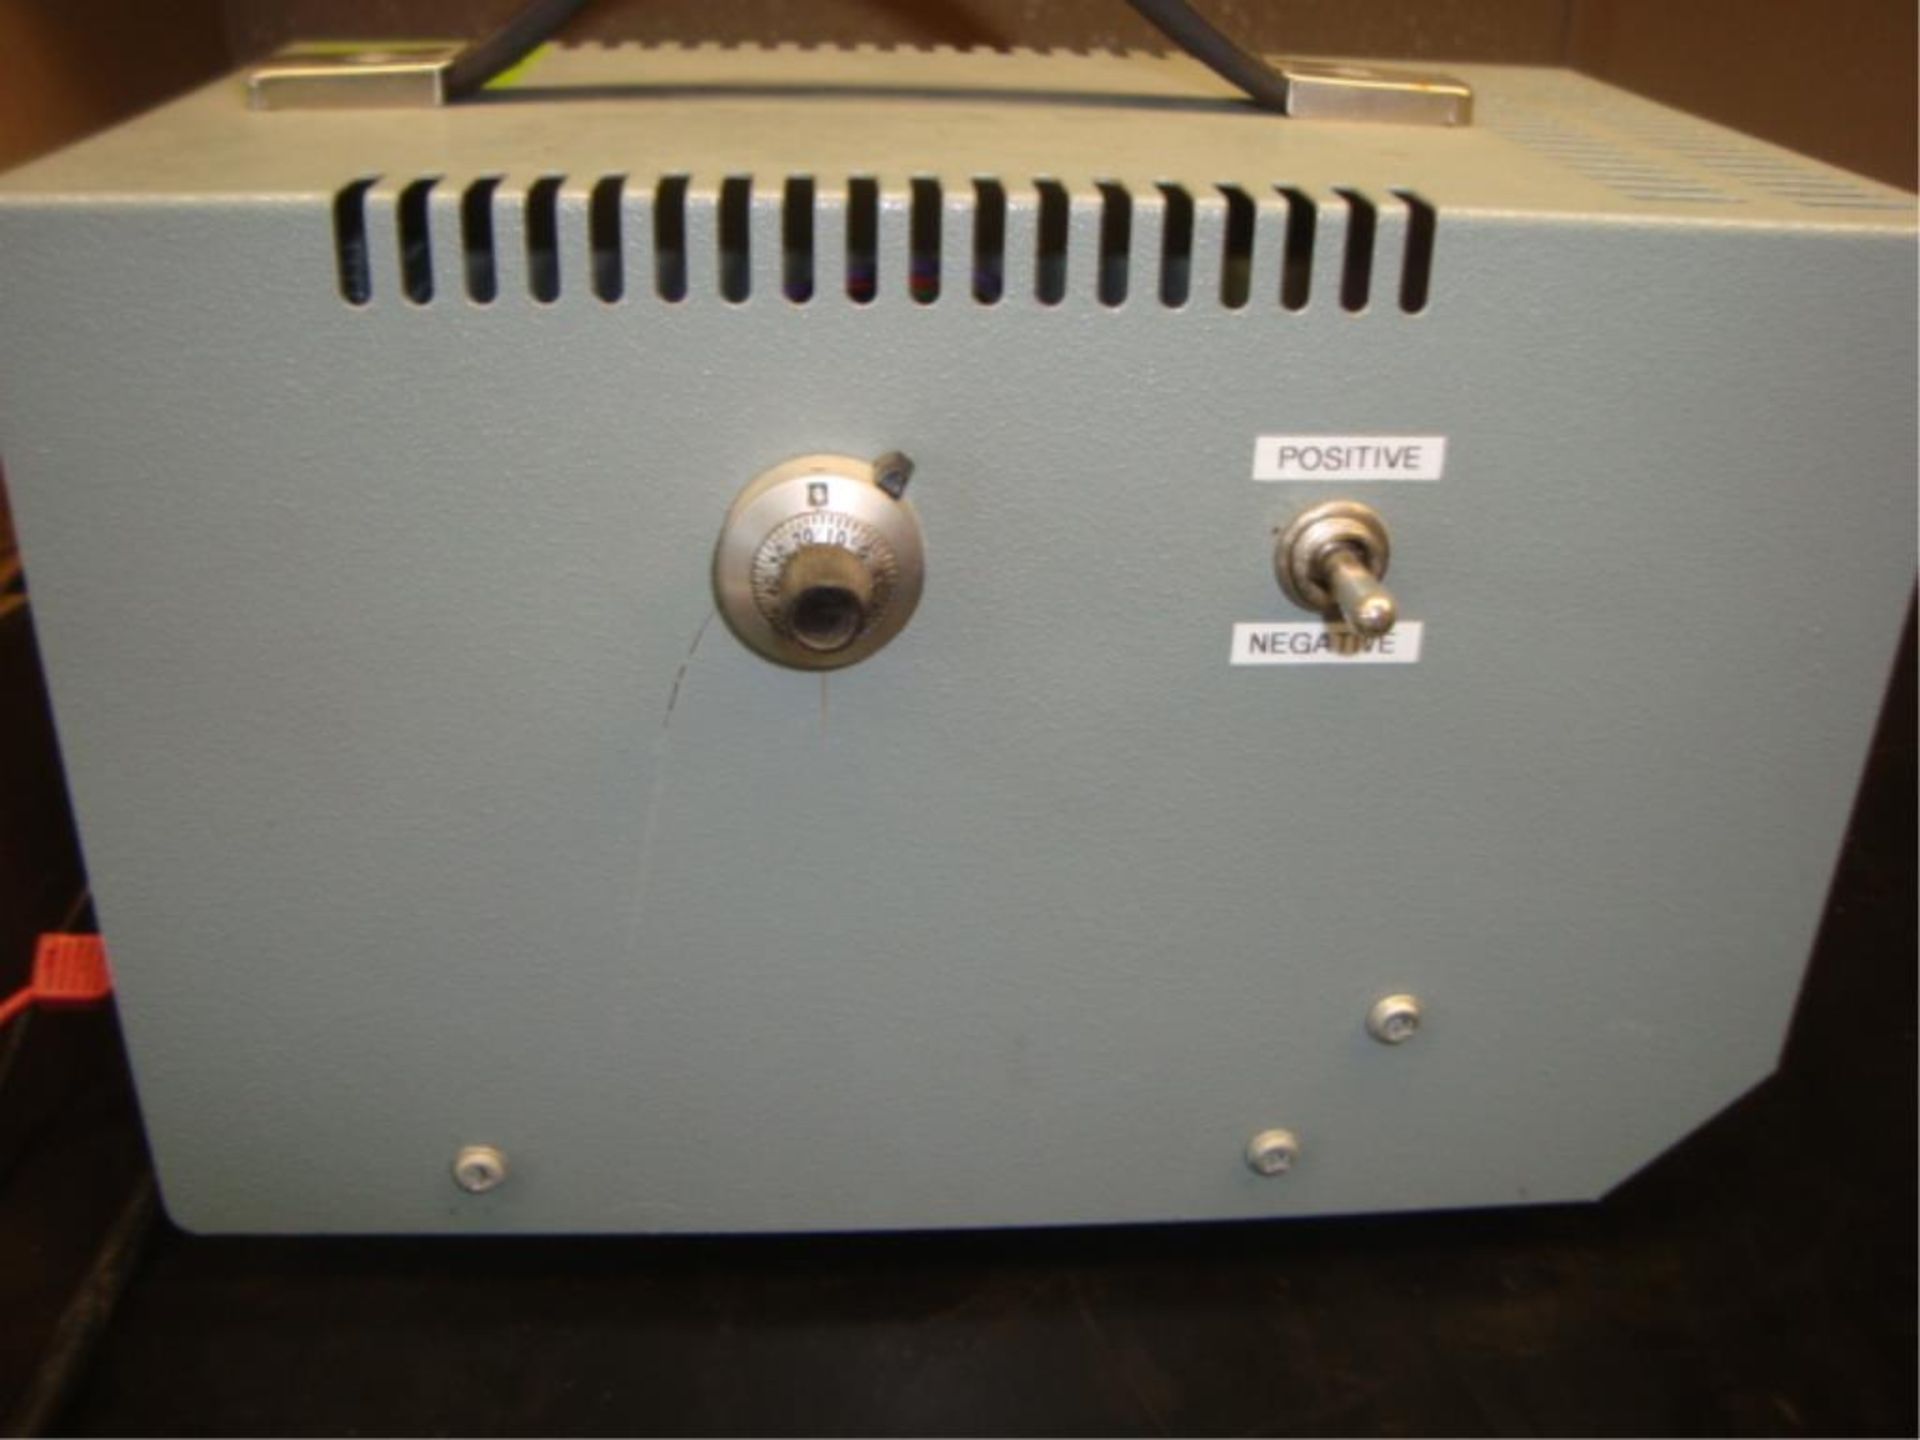 Digital DC Power Supply, 0-32V, 0-2A - Image 4 of 7